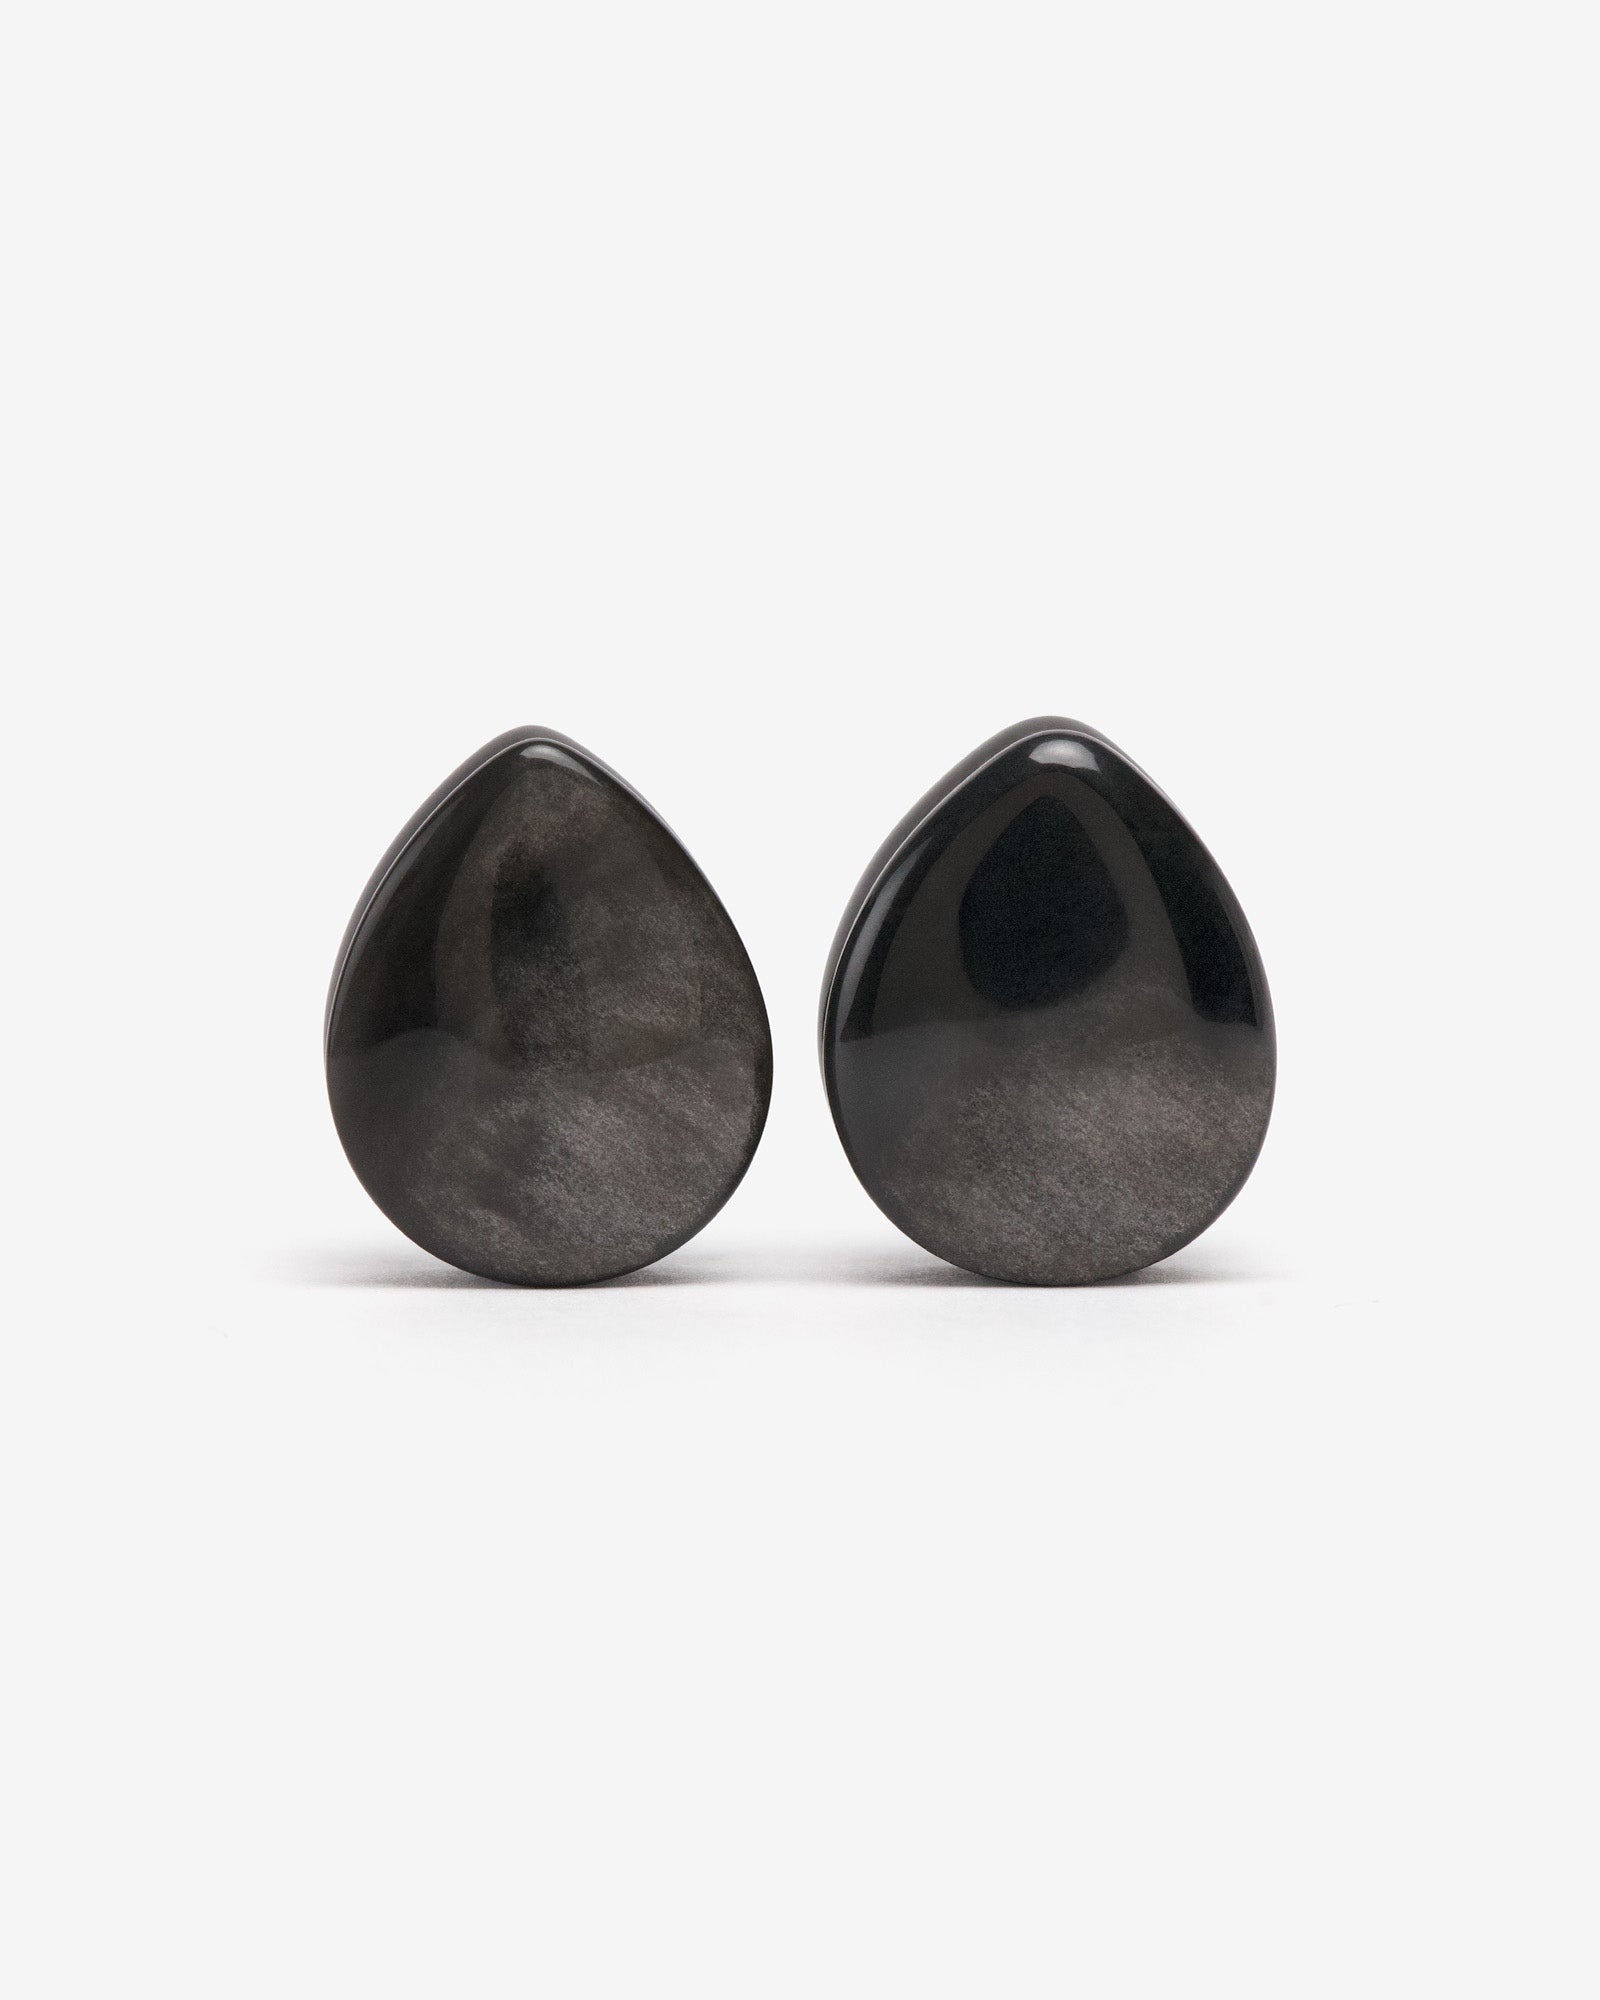 Silver Obsidian Teardrop Plugs - Plugs - Ask and Embla